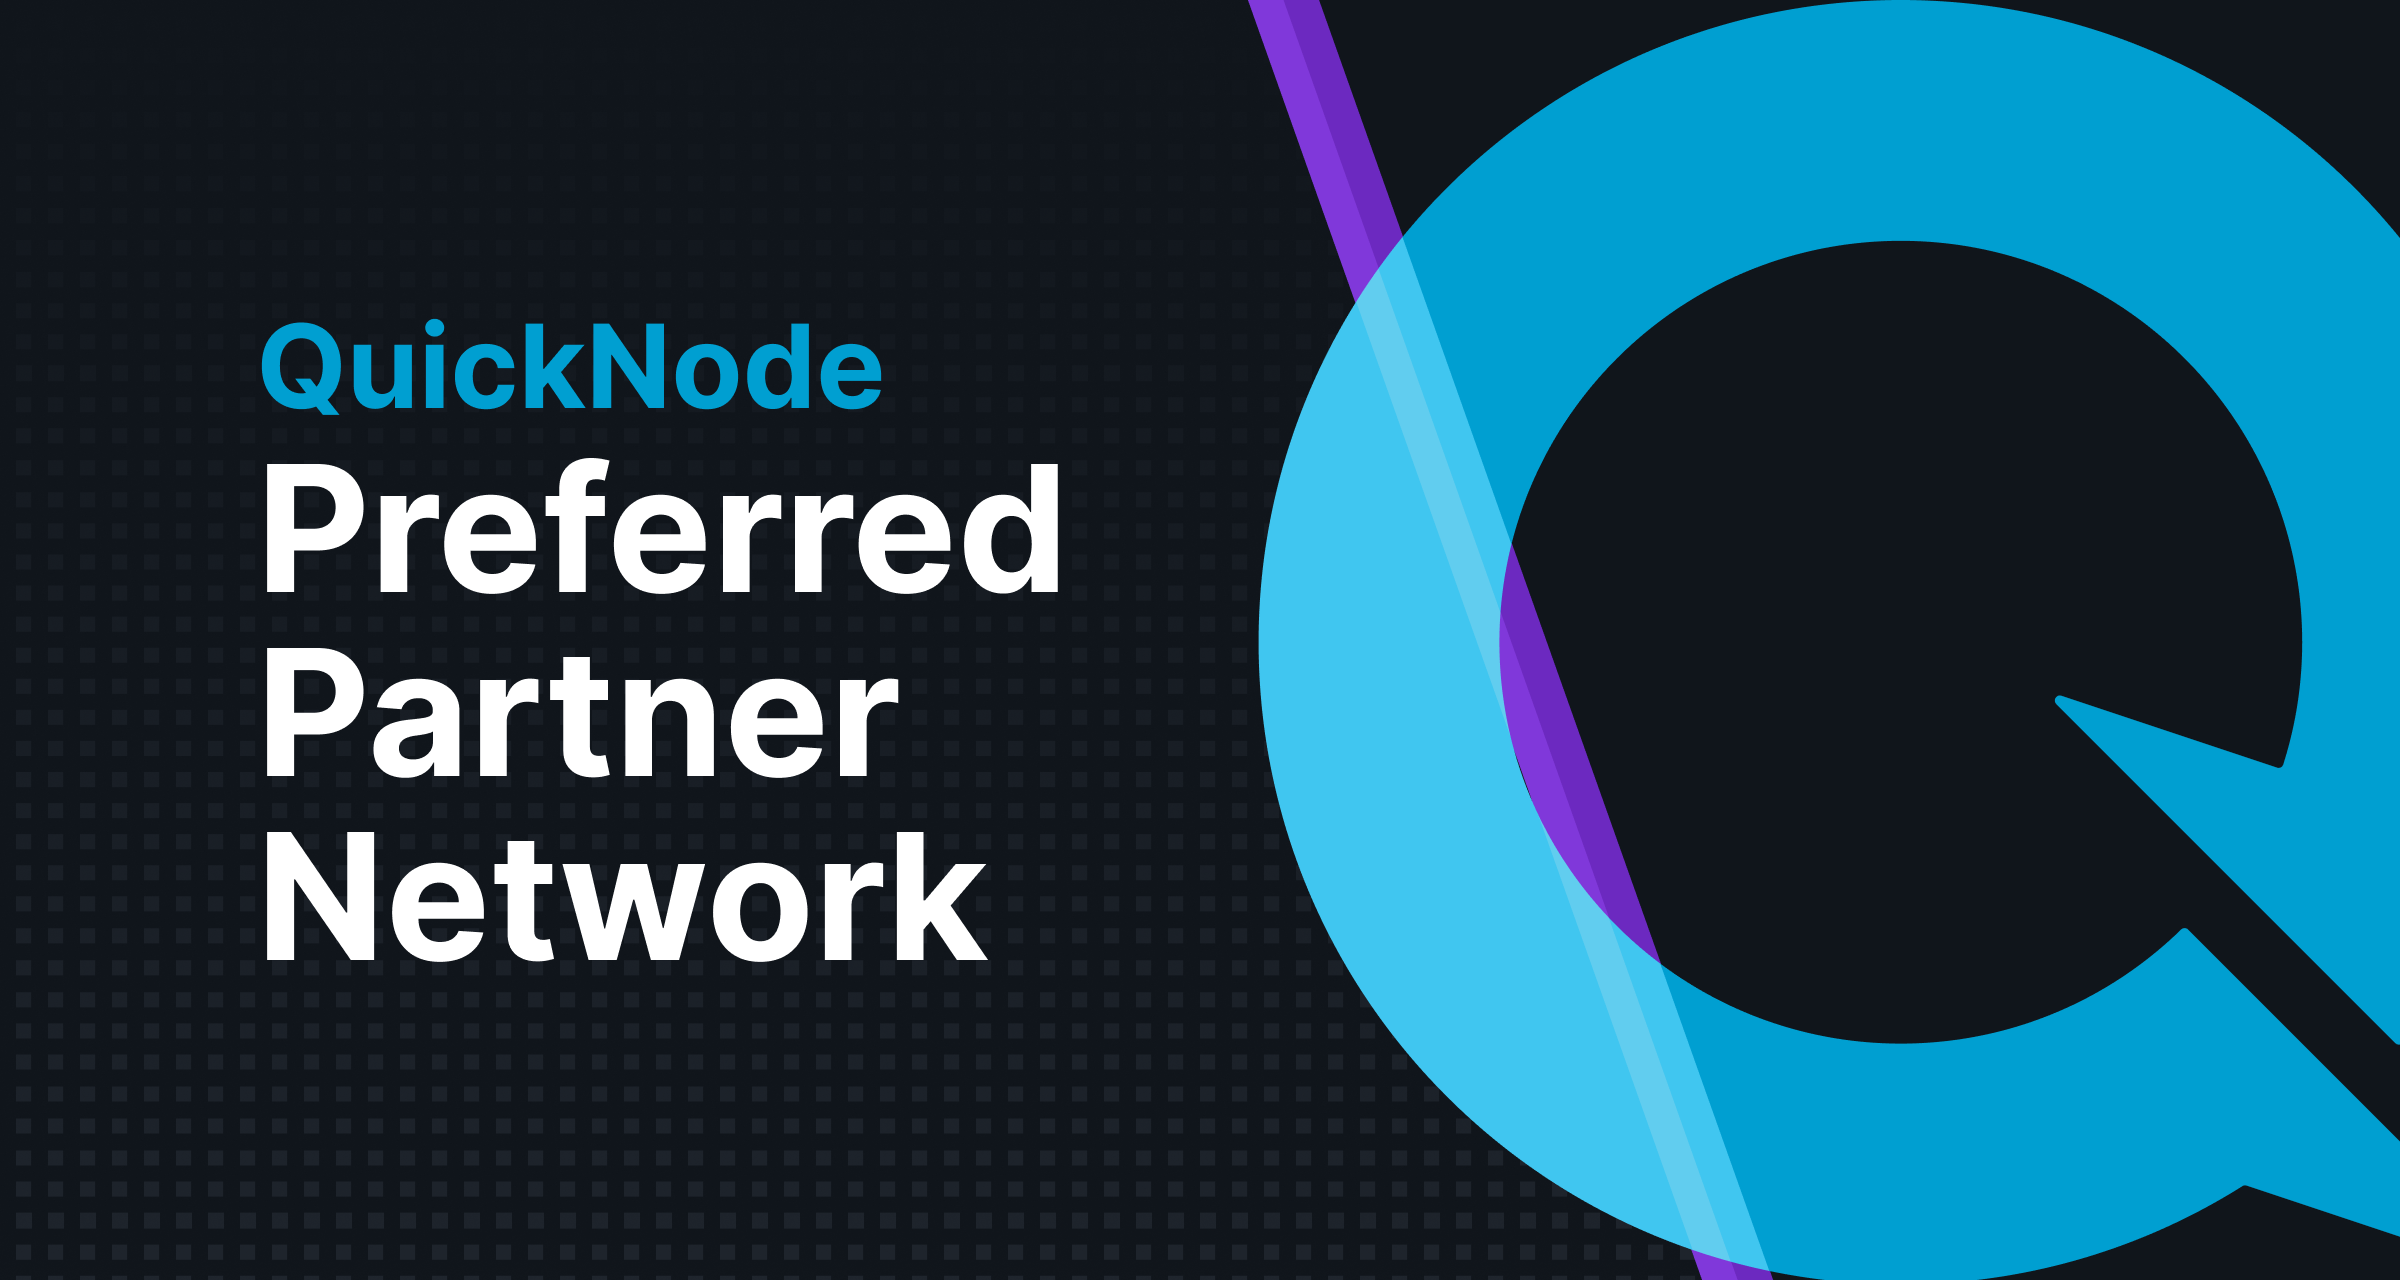 Join QuickNode’s Preferred Partner Network